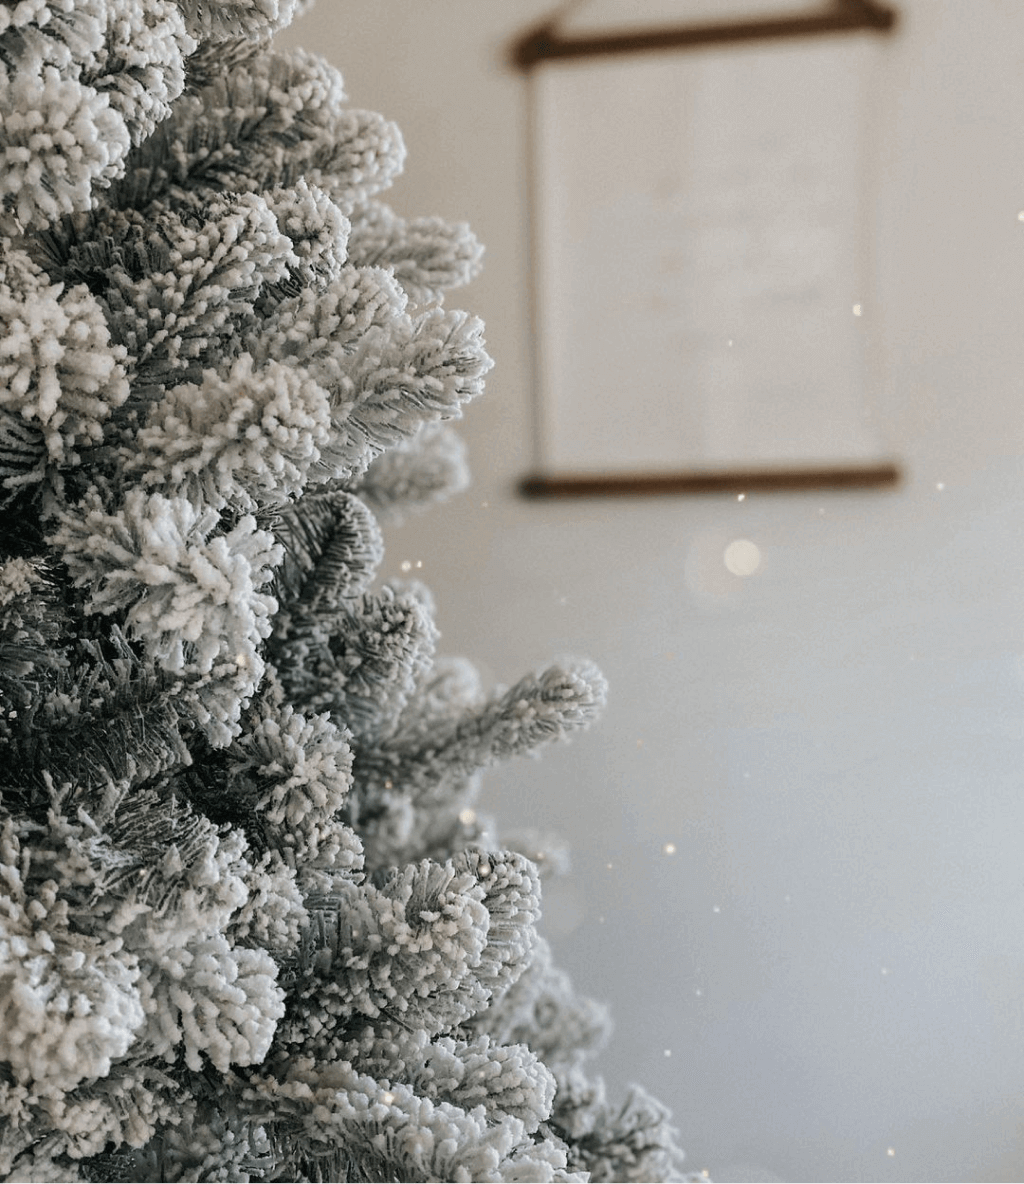 King of Christmas 10' King Flock® Slim Artificial Christmas Tree Unlit